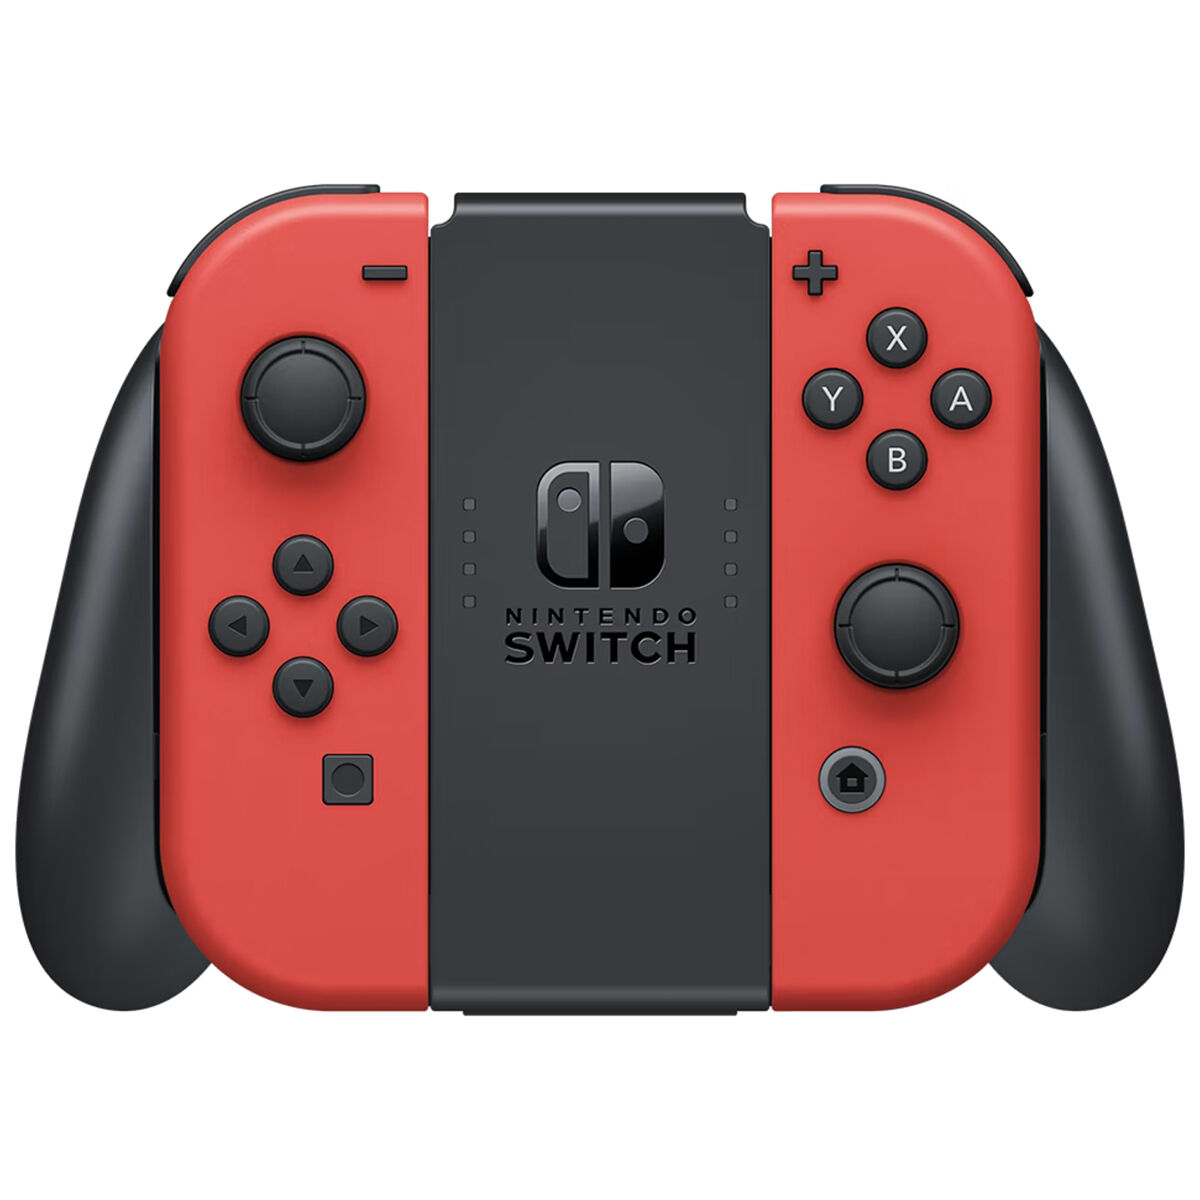 Nintendo Switch - OLED Model: Mario Red Edition | P.C. Richard & Son